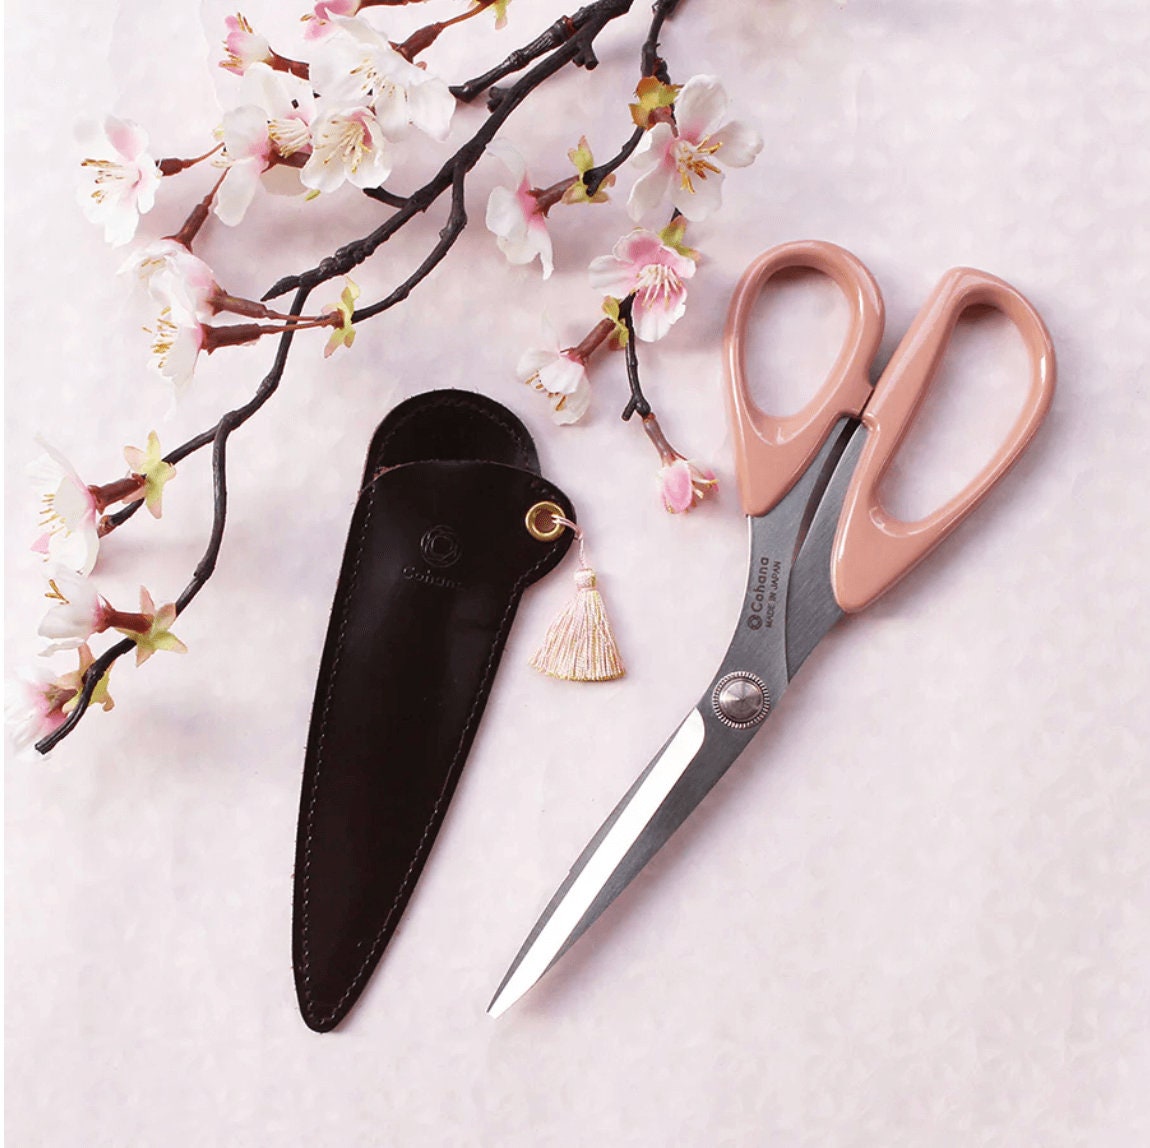 Ombre Scissors With Sheath, Beautiful Soft Color Small Scissors